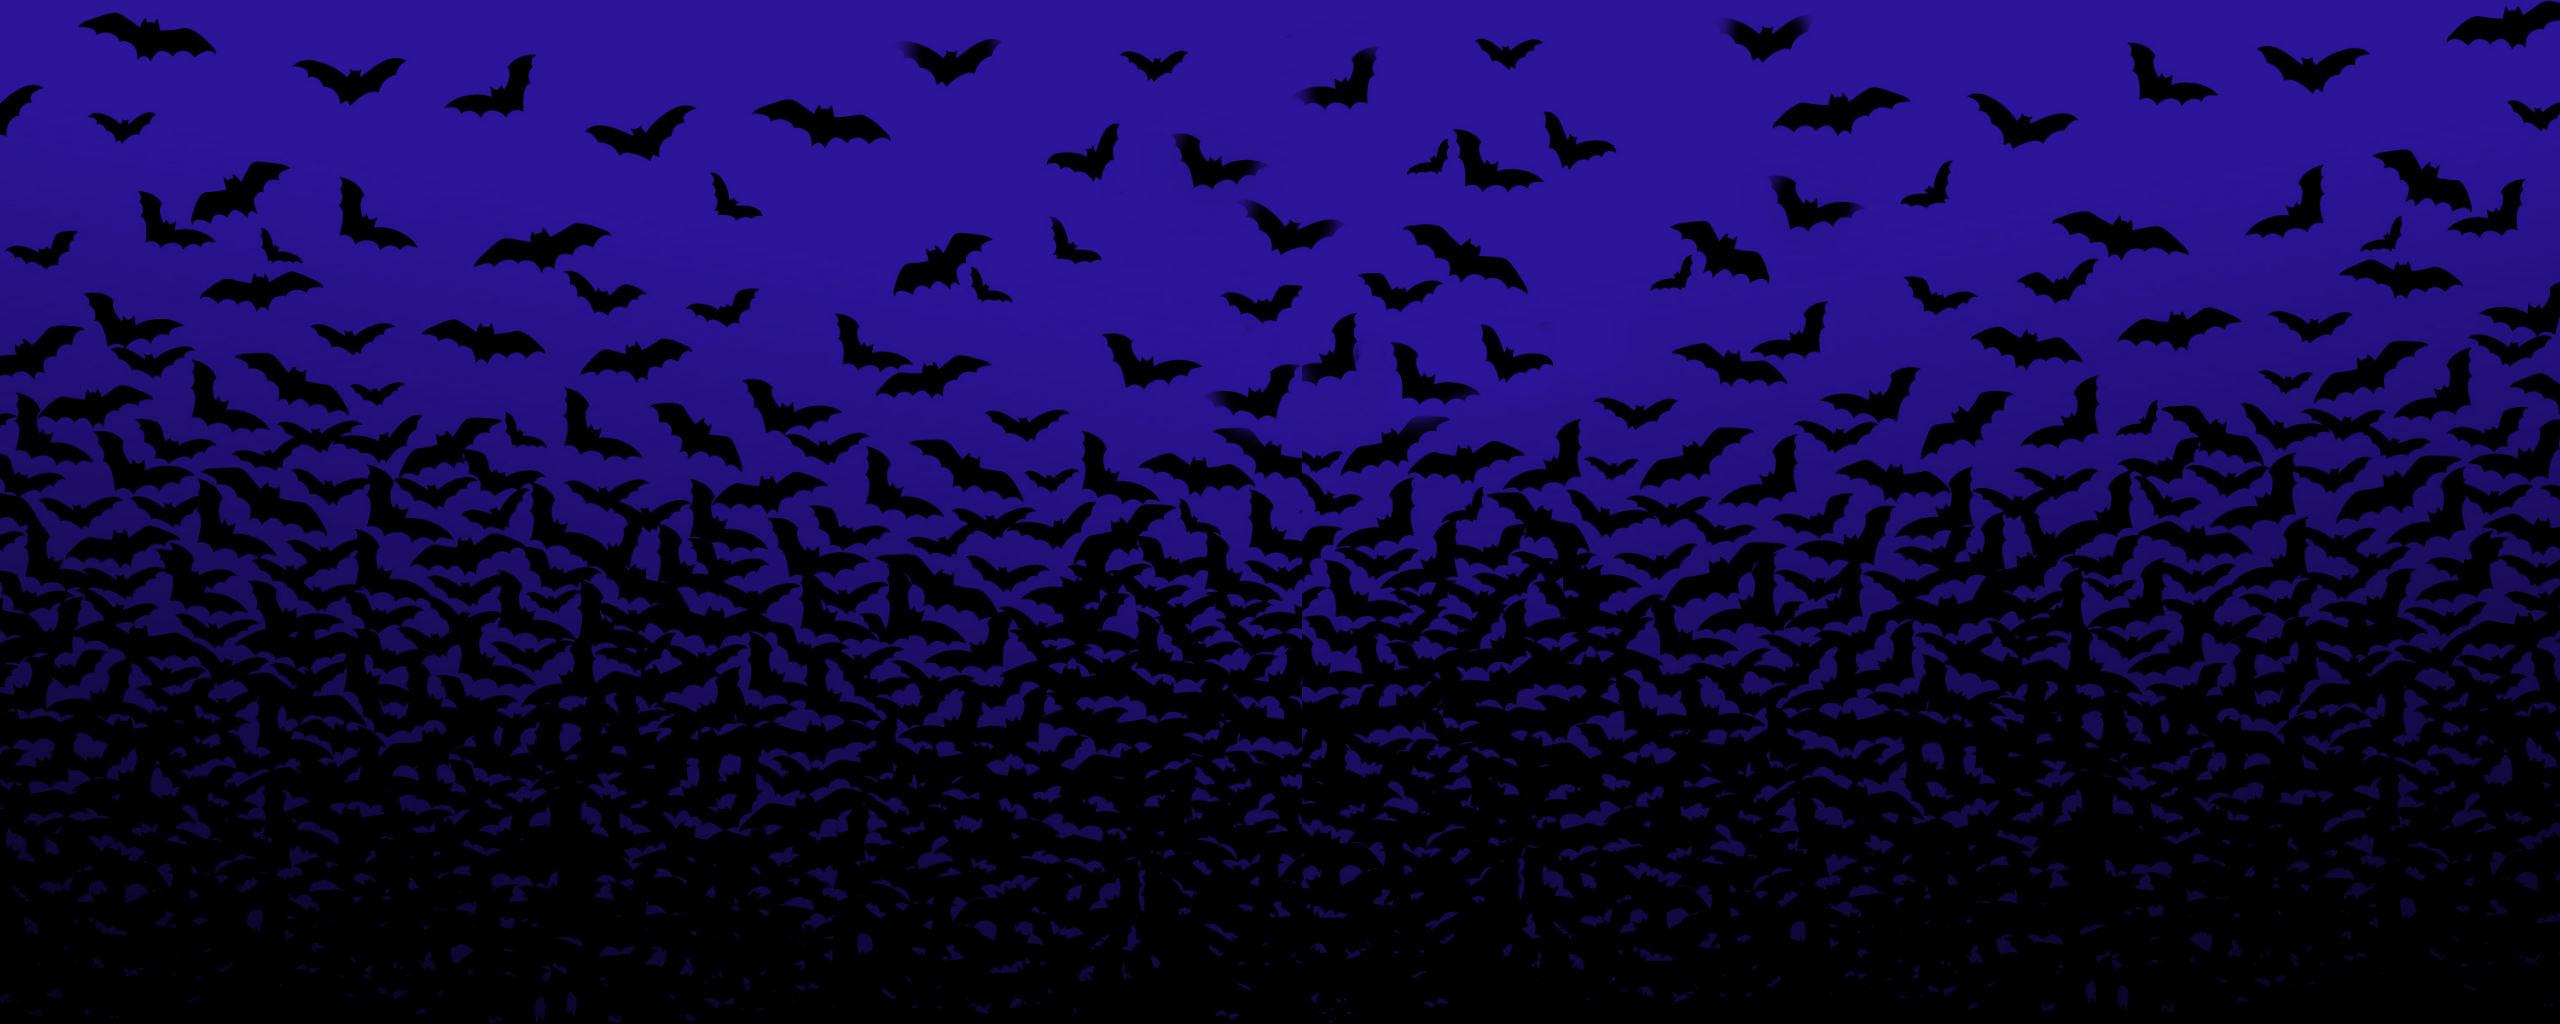 Bat Background. Bat Wallpaper, Halloween Bat Wallpaper and Mortal Kombat Wallpaper